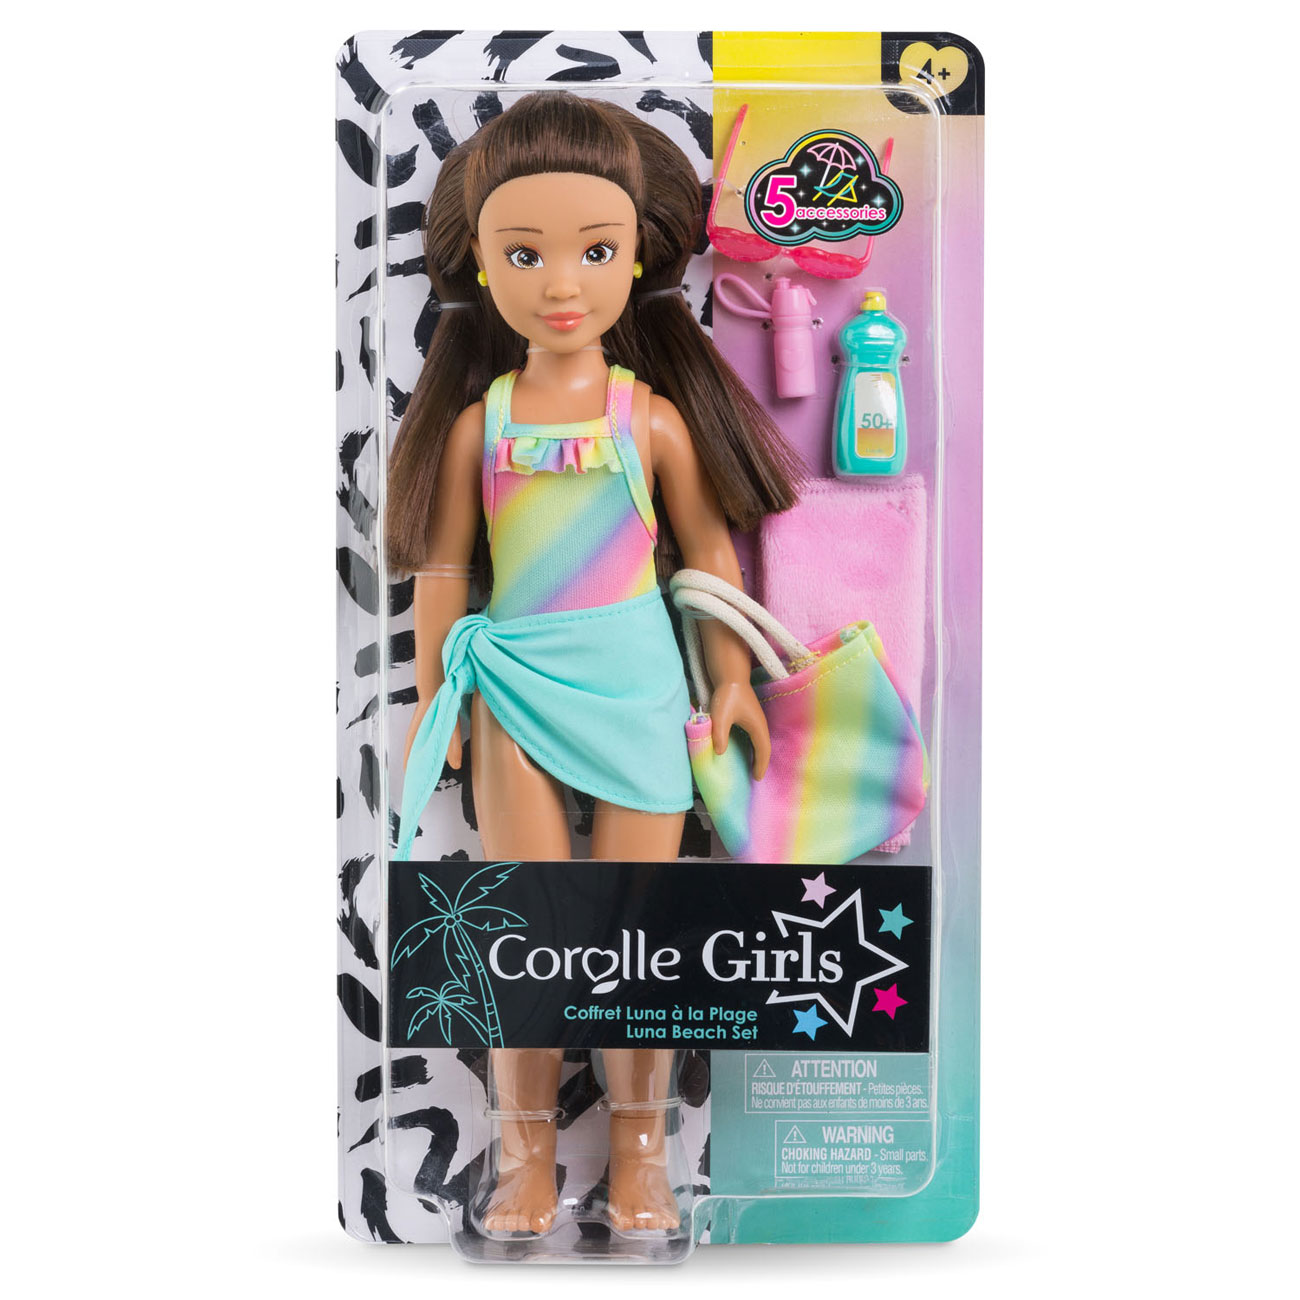 Corolle Girls - Fashion Doll Luna Beach Set